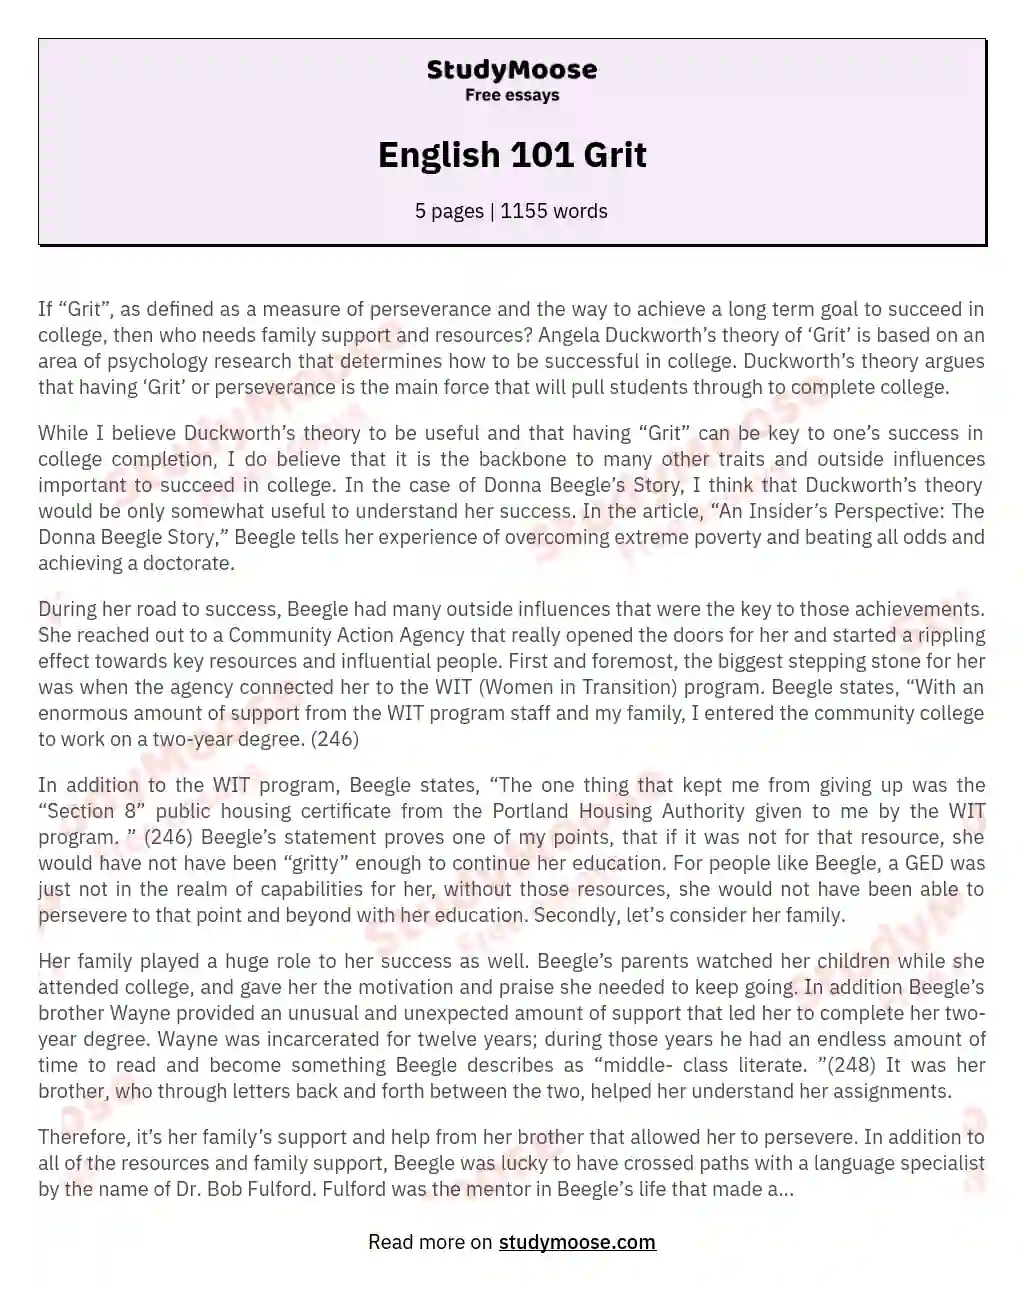 English 101 Grit essay